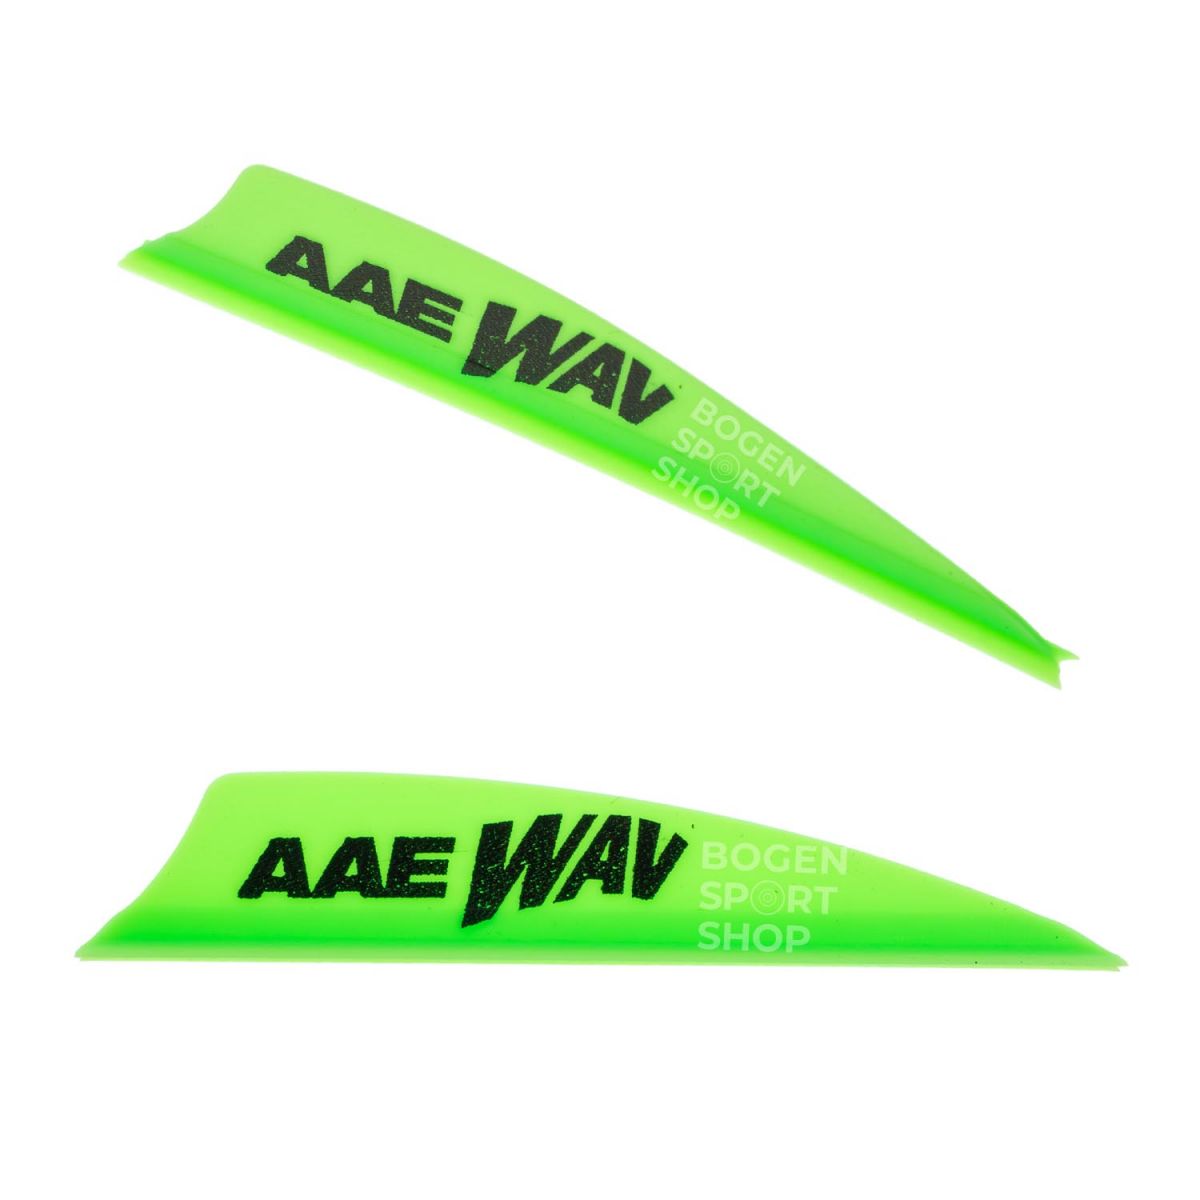 AAE Arizona Vanes WAV 2.0" (50 Pcs.)